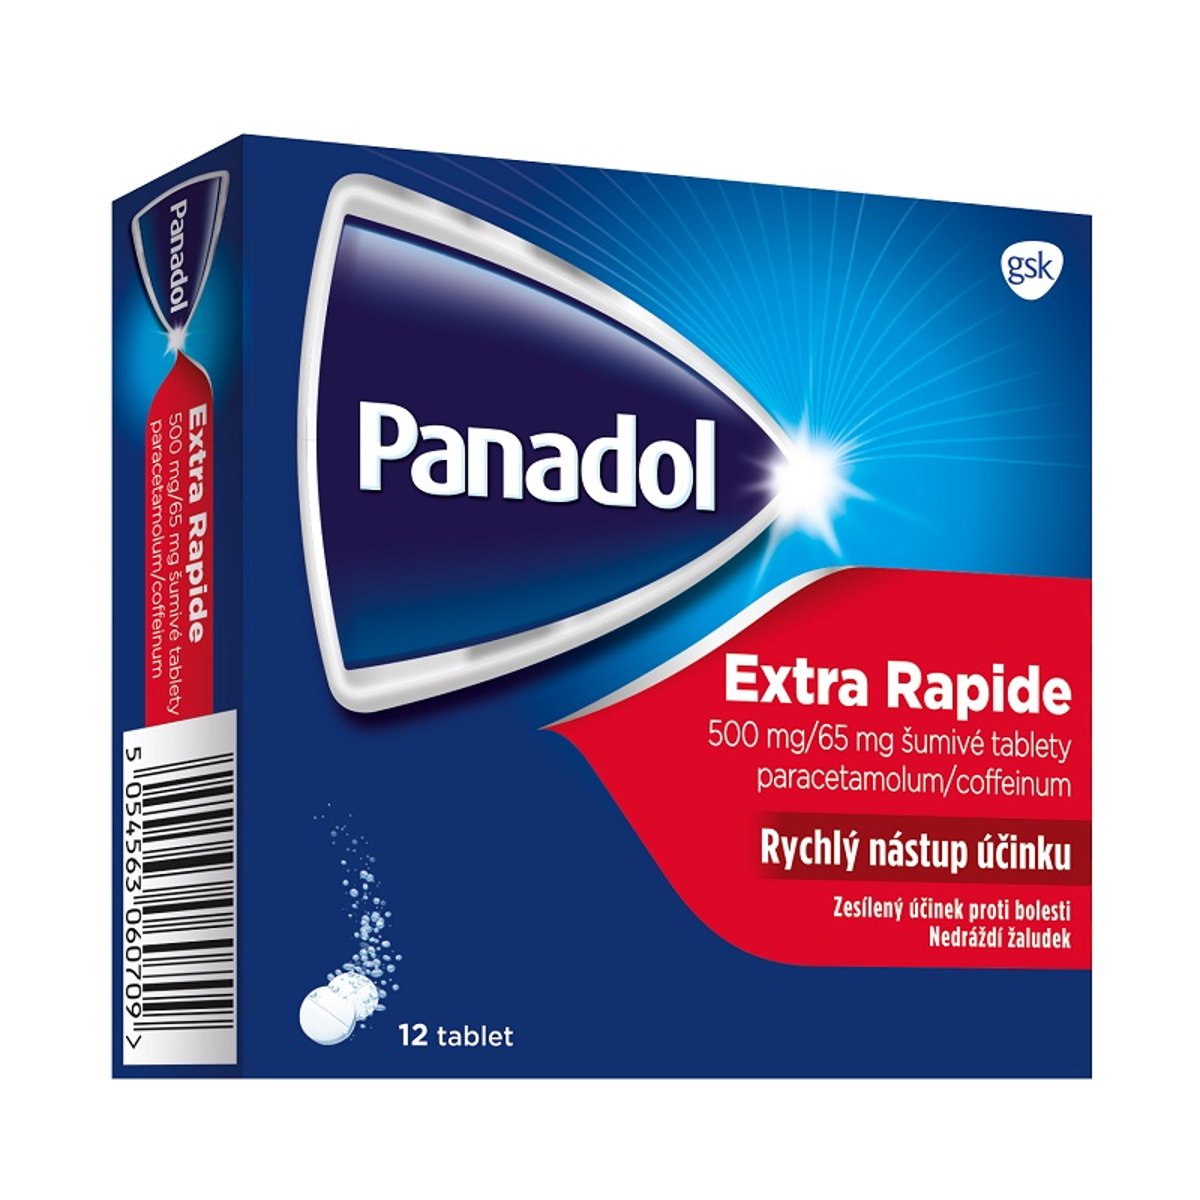 PANADOL EXTRA RAPIDE 500MG/65MG šumivá tableta 12